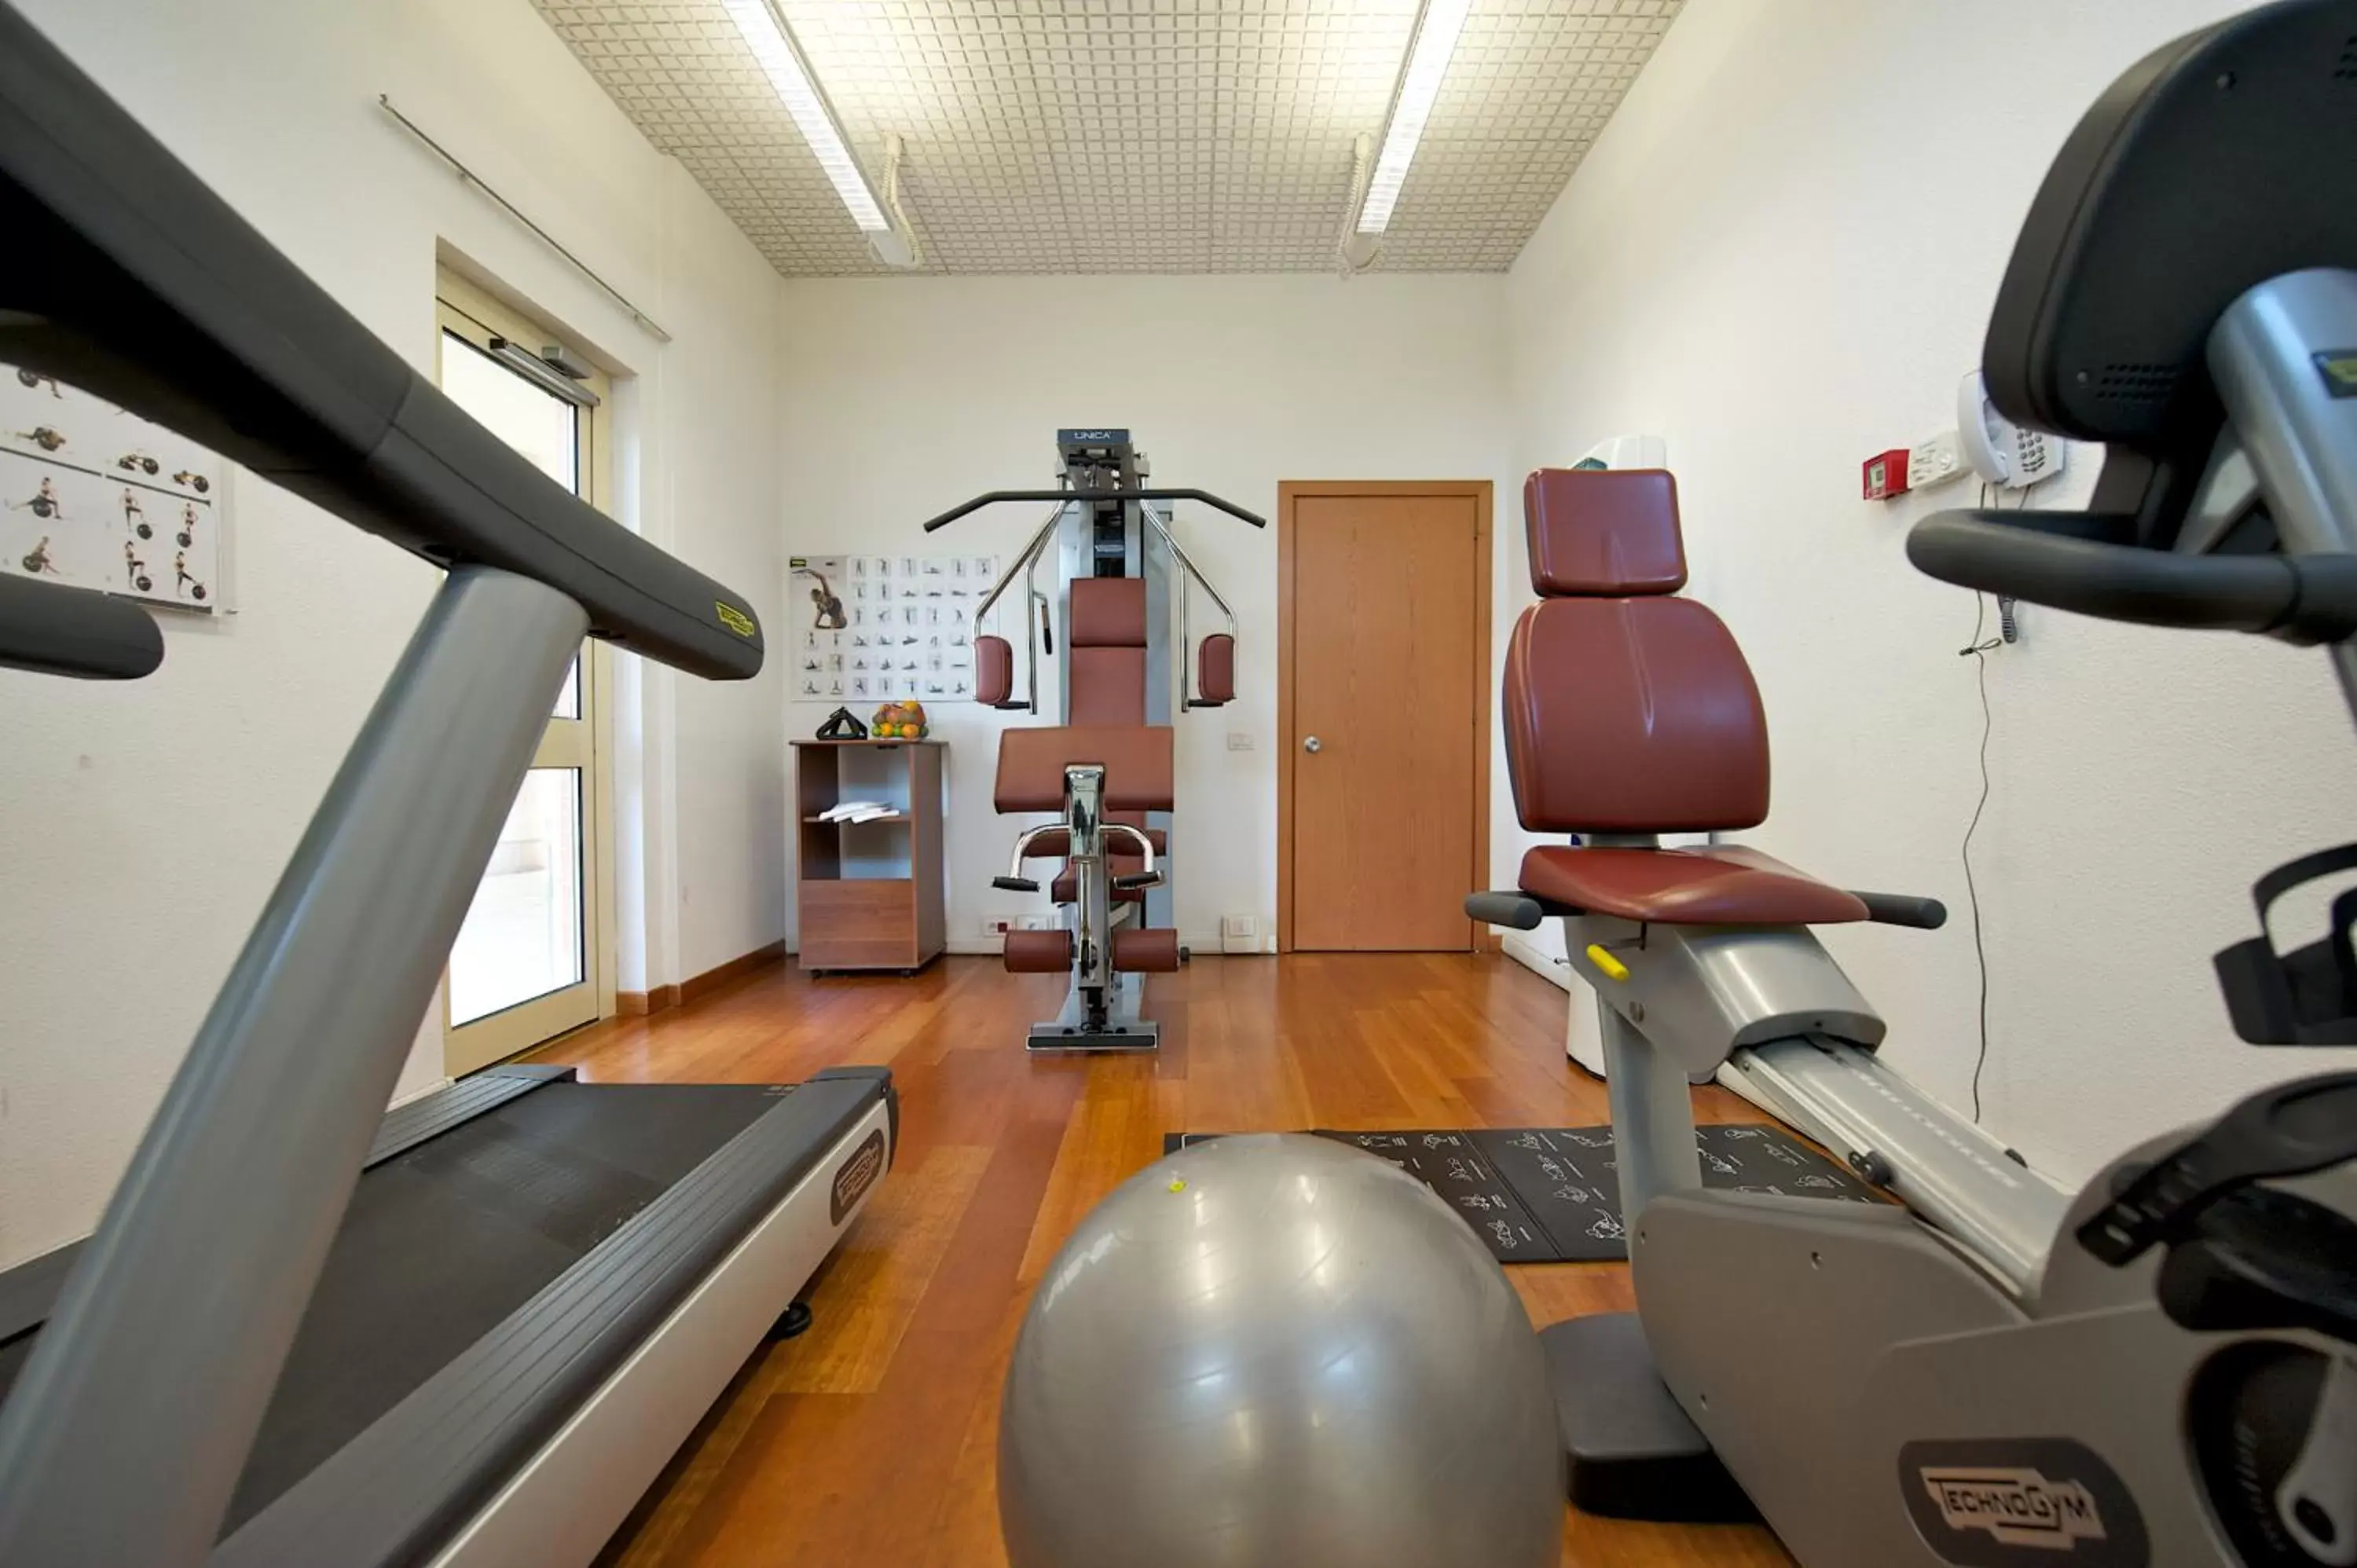 Fitness centre/facilities, Fitness Center/Facilities in Novotel Roma Est